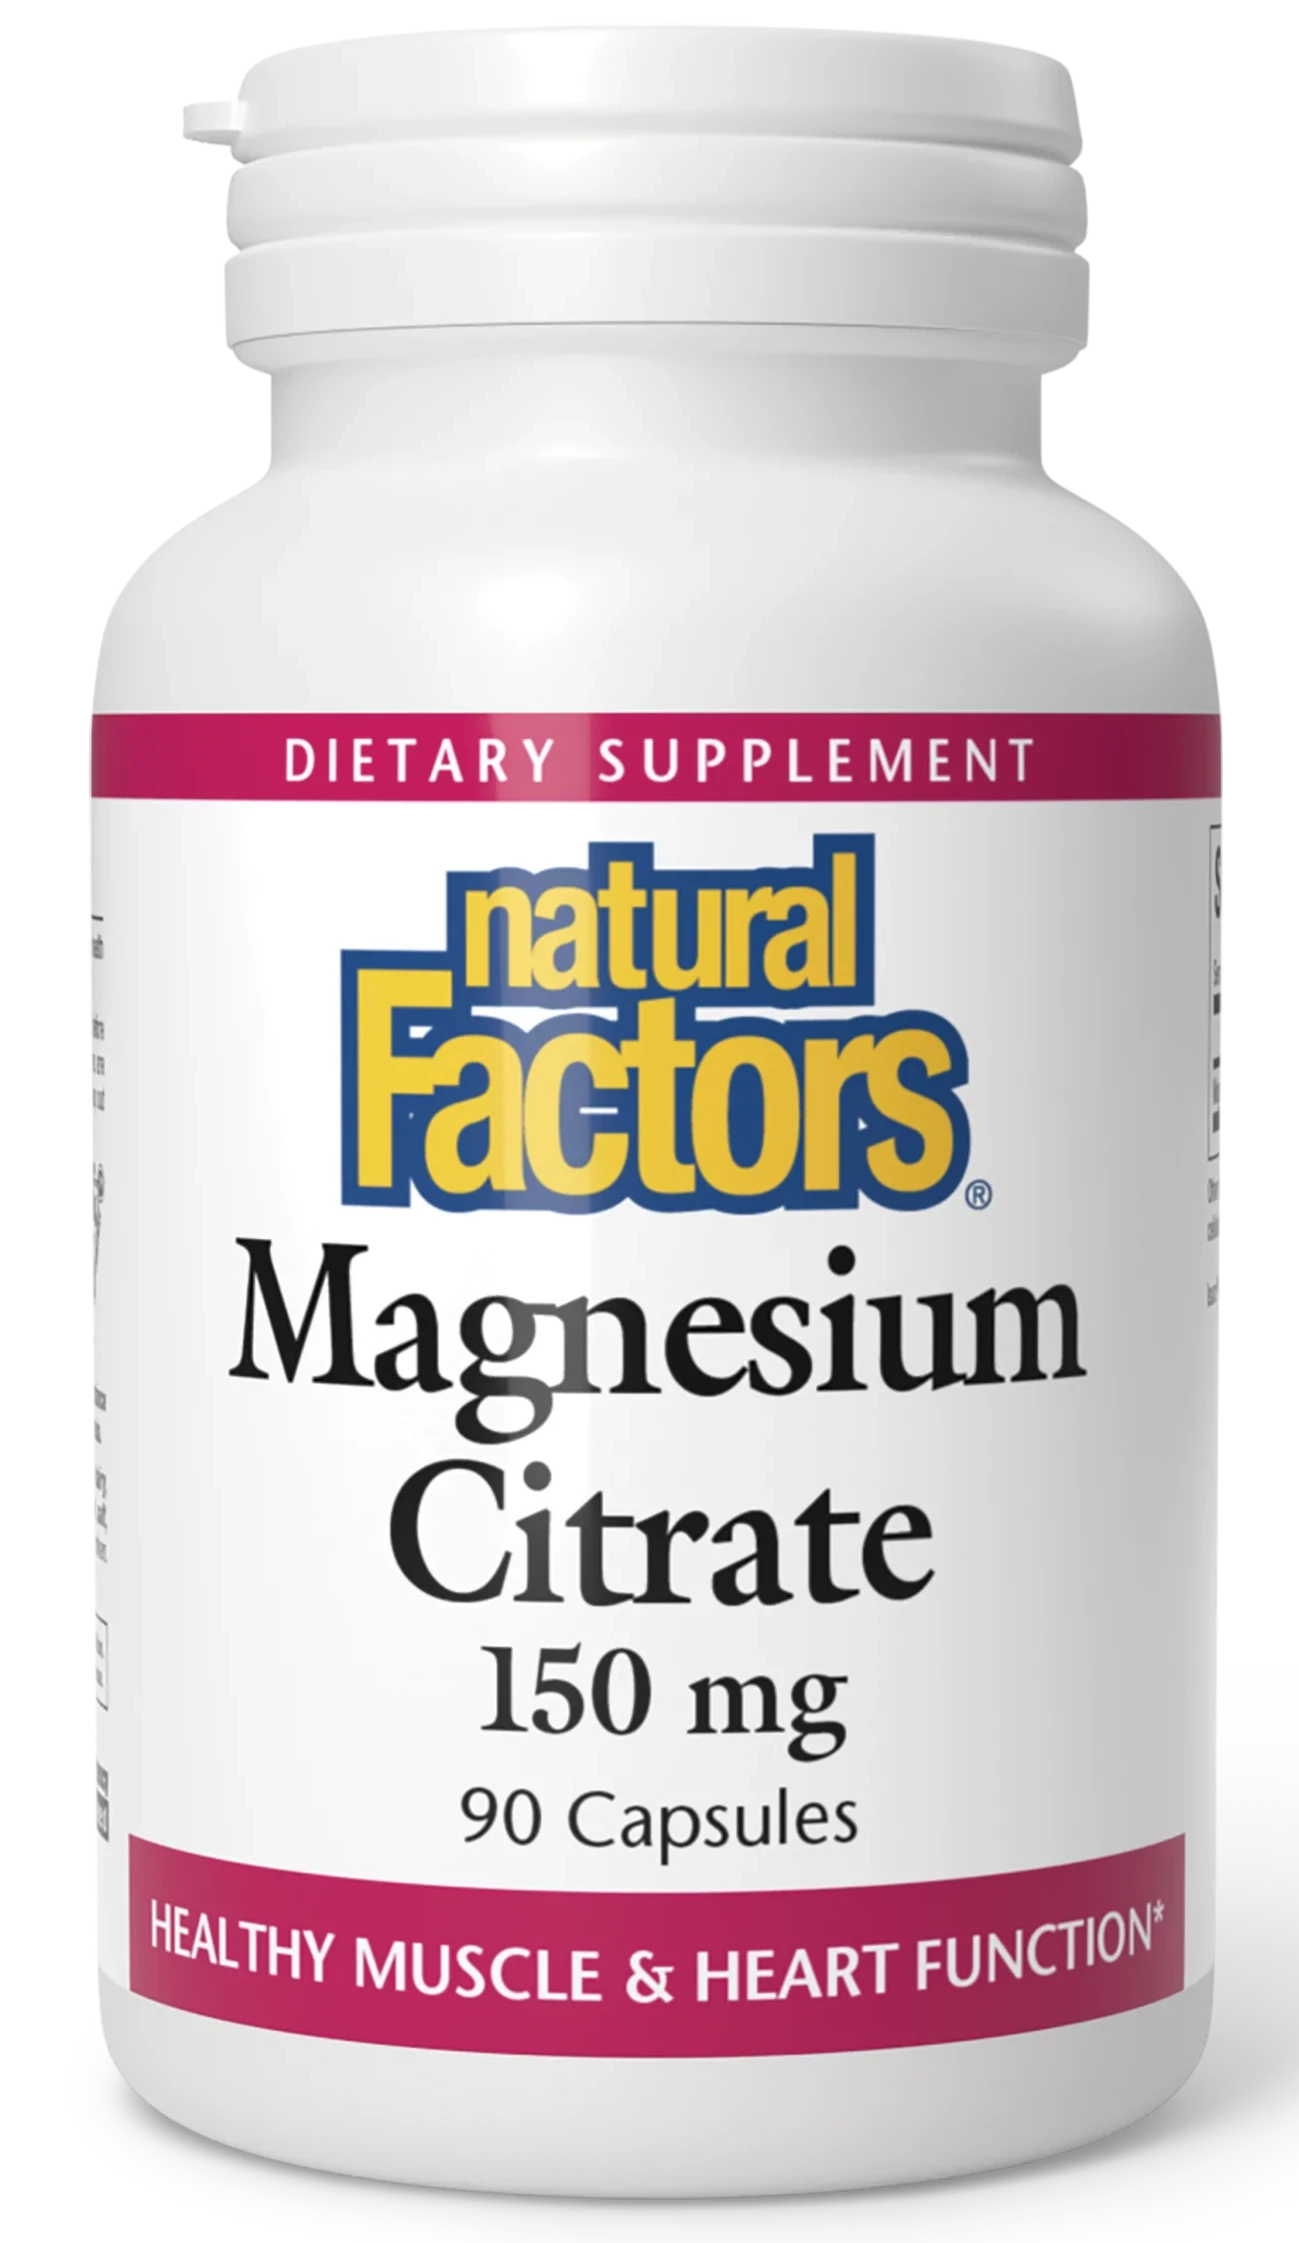 Magnesium Citrate 150 mg by Natural Factors, 90 cap